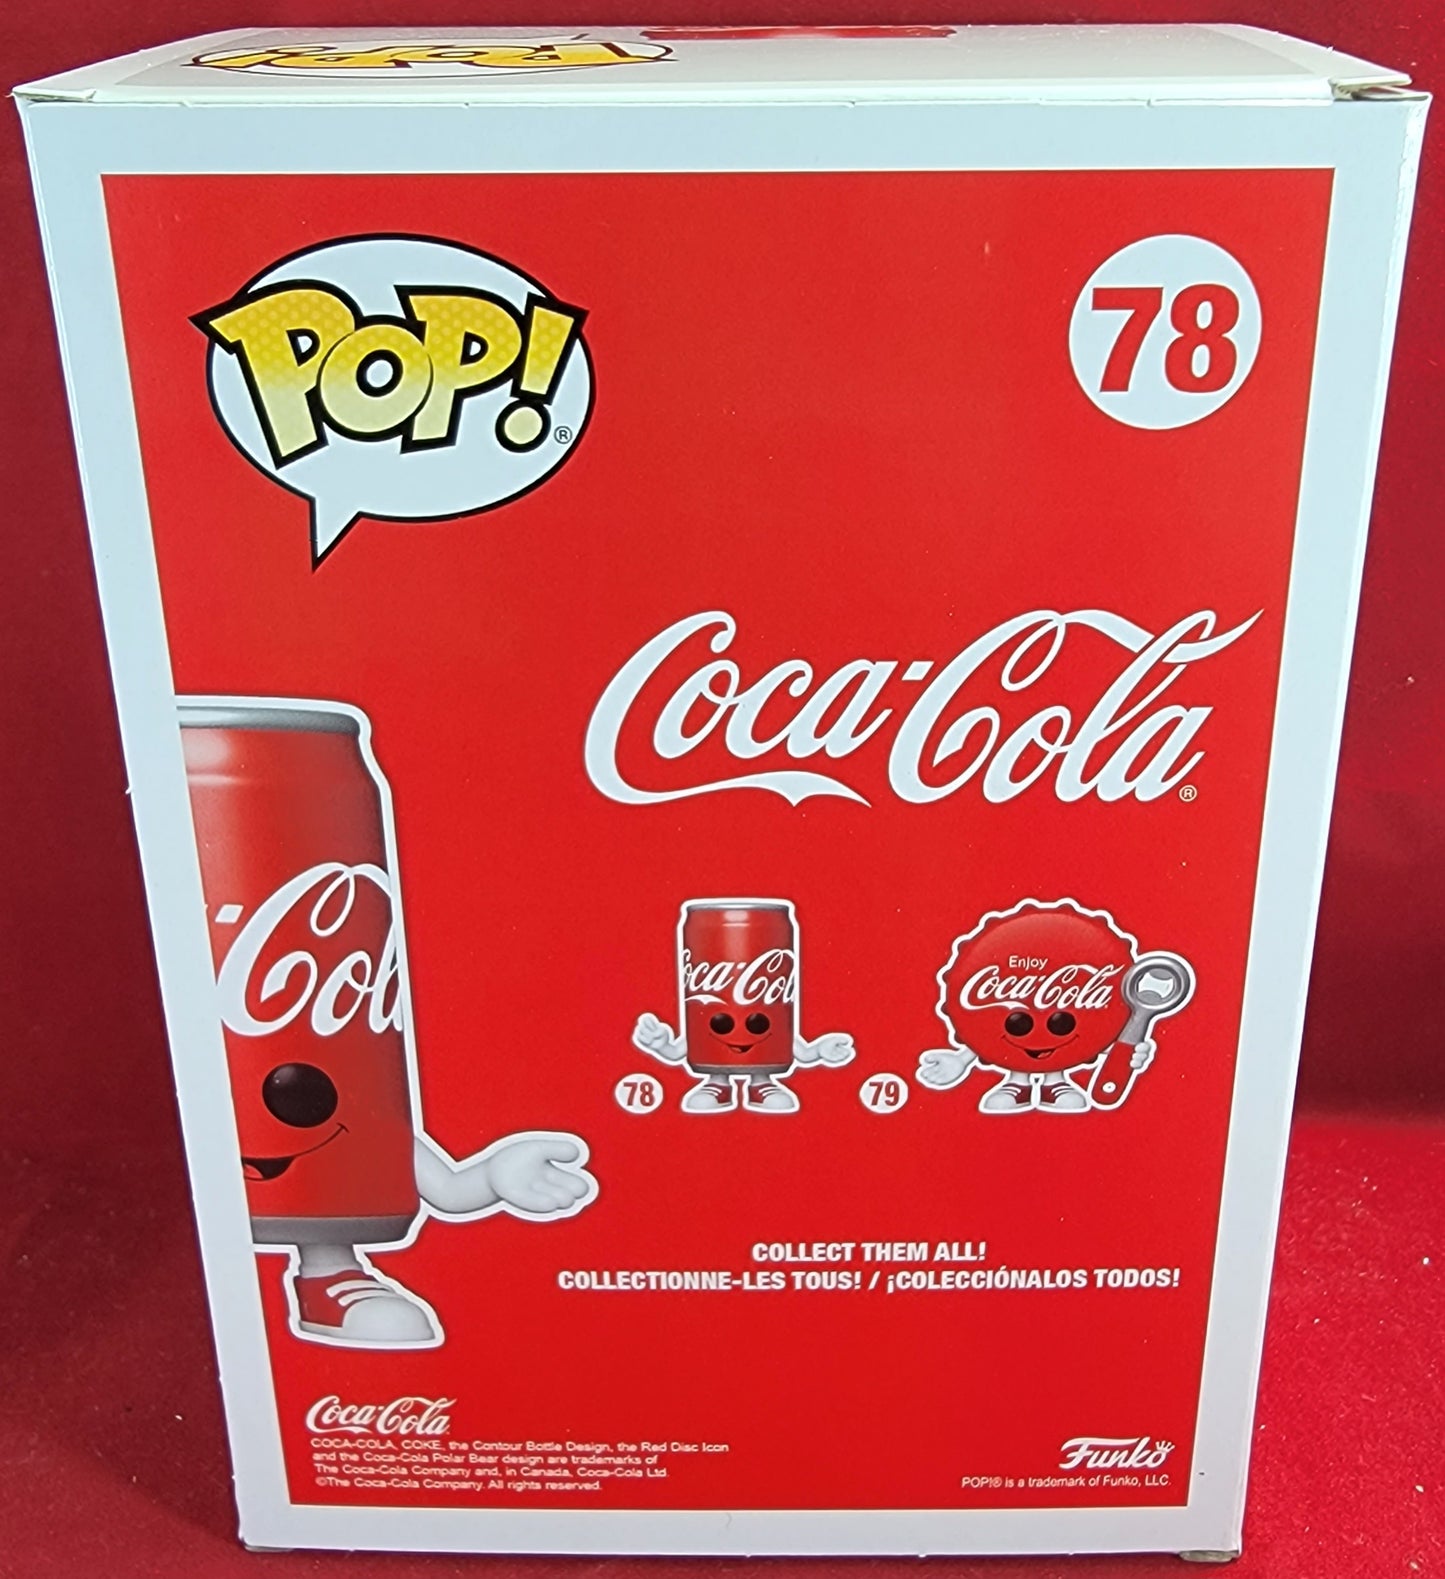 Coca-cola can boxlunch exclusive funko # 78 (nib)